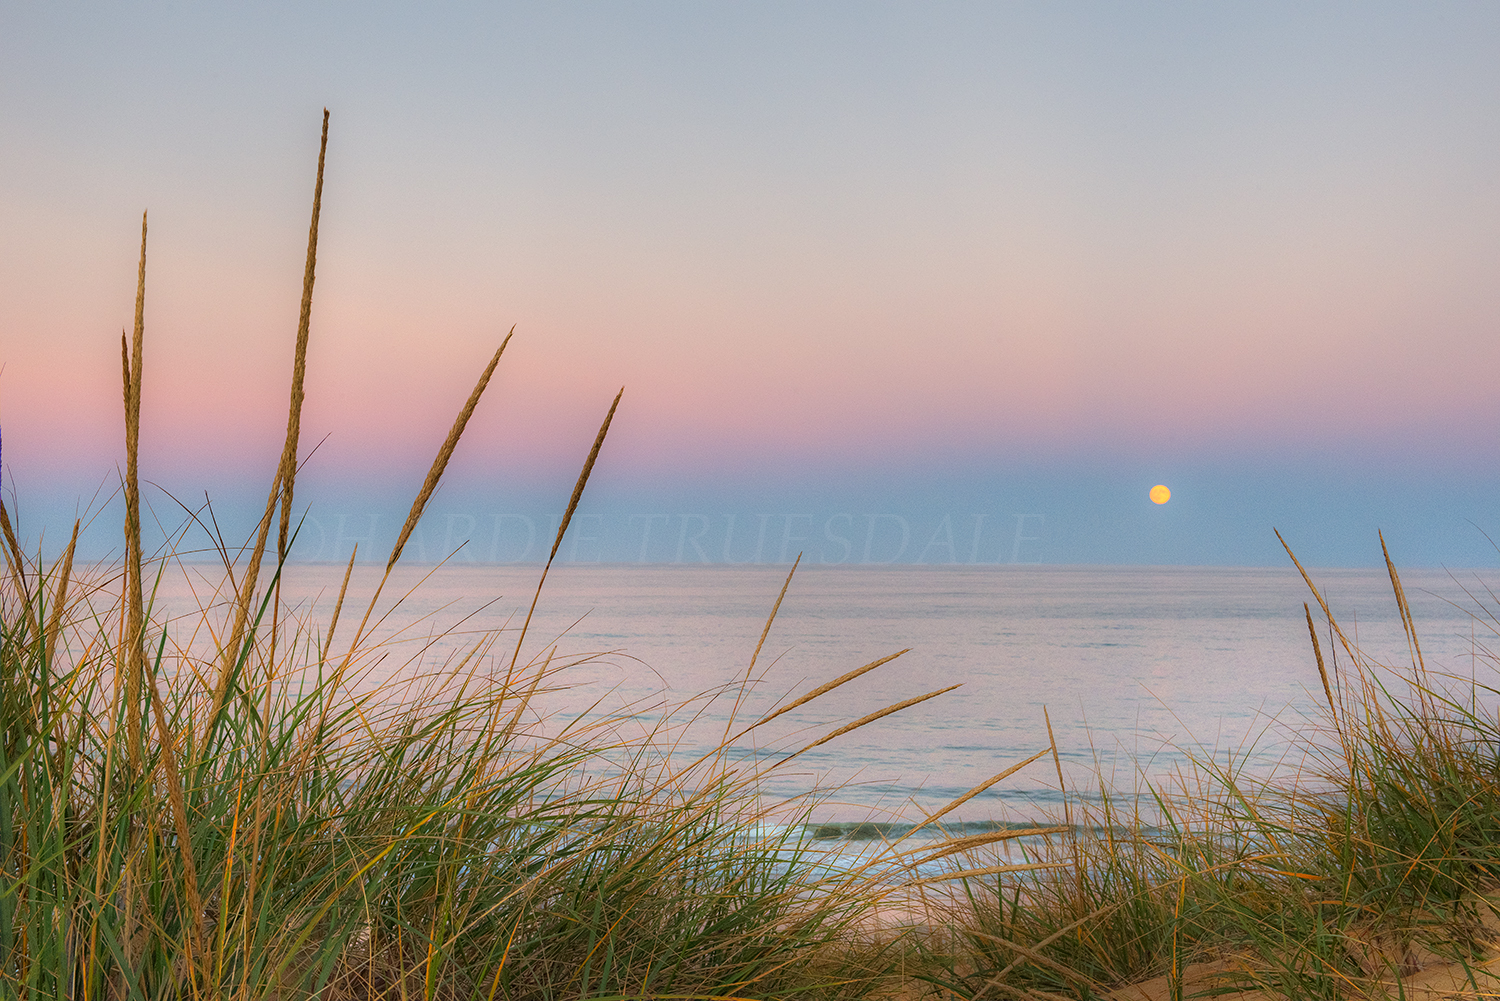 CC#141a "Dune Grass Moonrise, Whitecrest Beach"